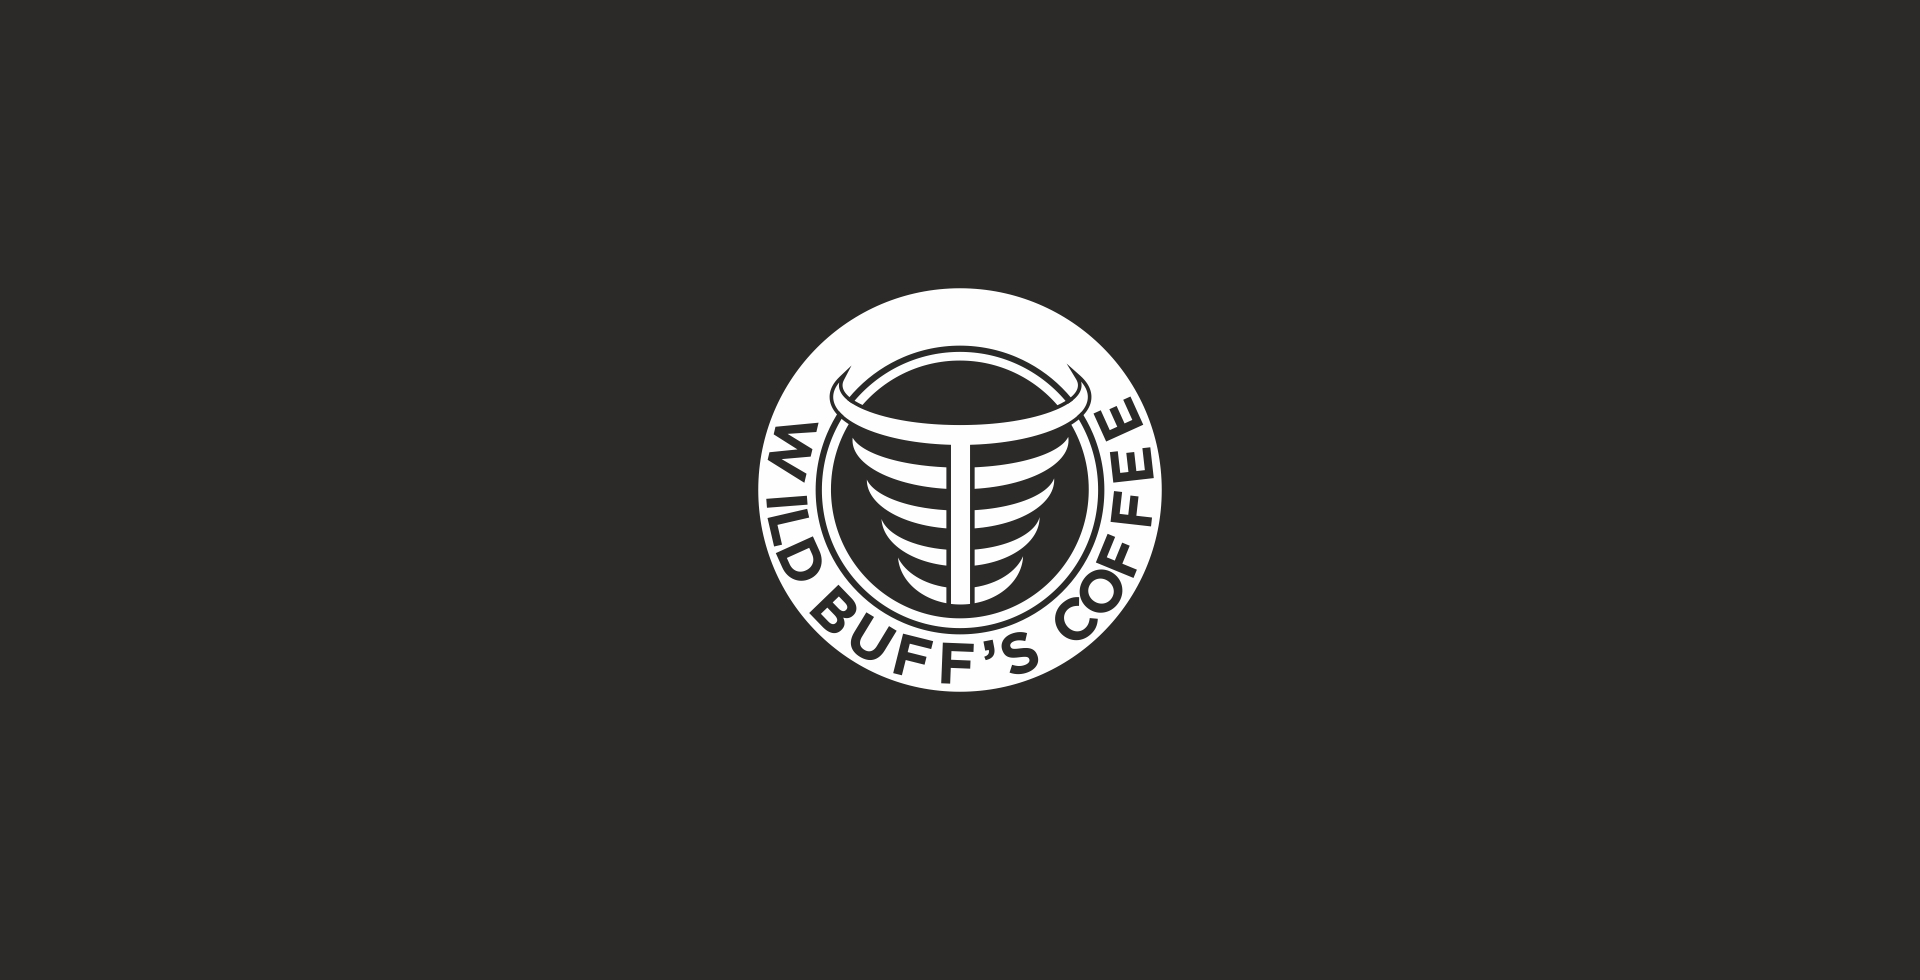 Wild Buff's Coffee - Cafe Hangout 